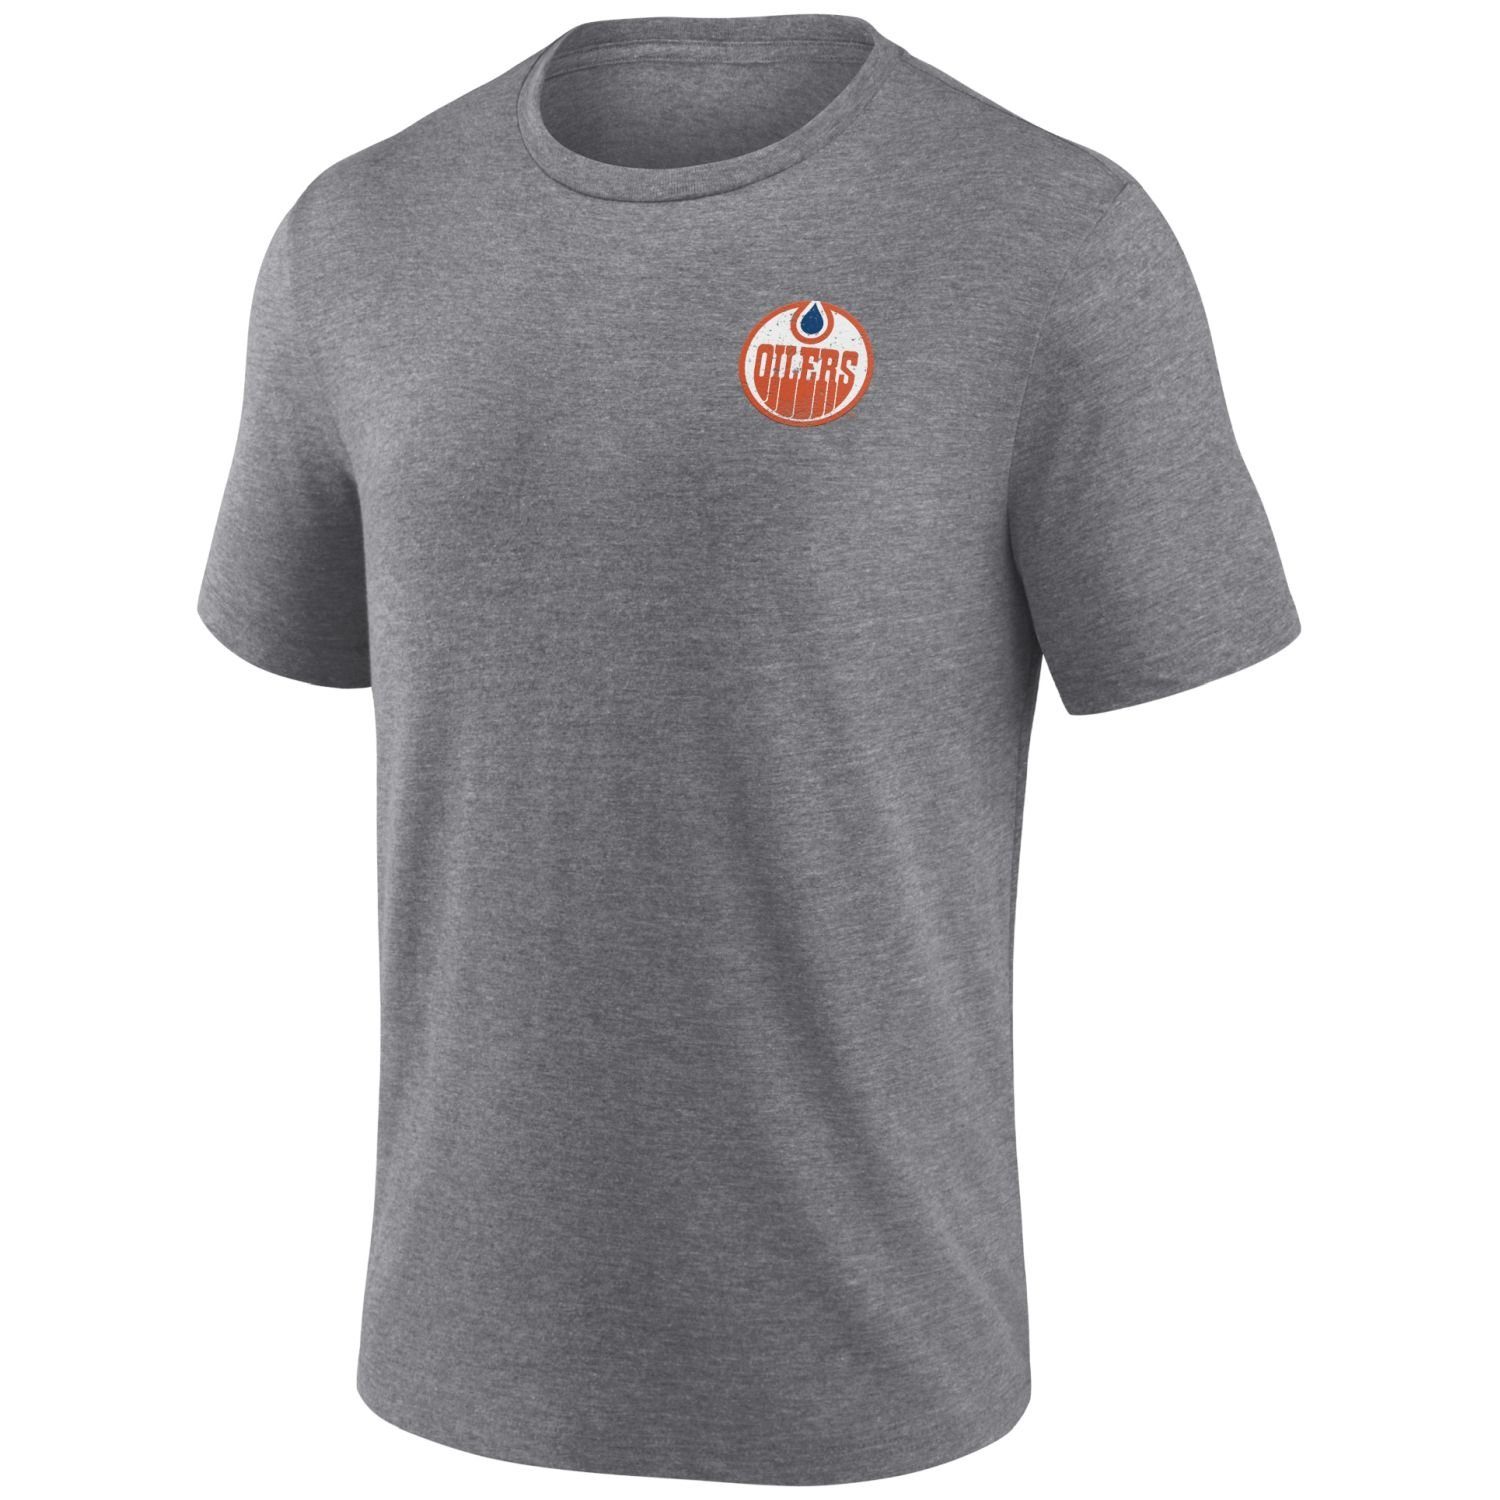 Print-Shirt Fanatics TriBlend Oilers heather Edmonton grey Backprint